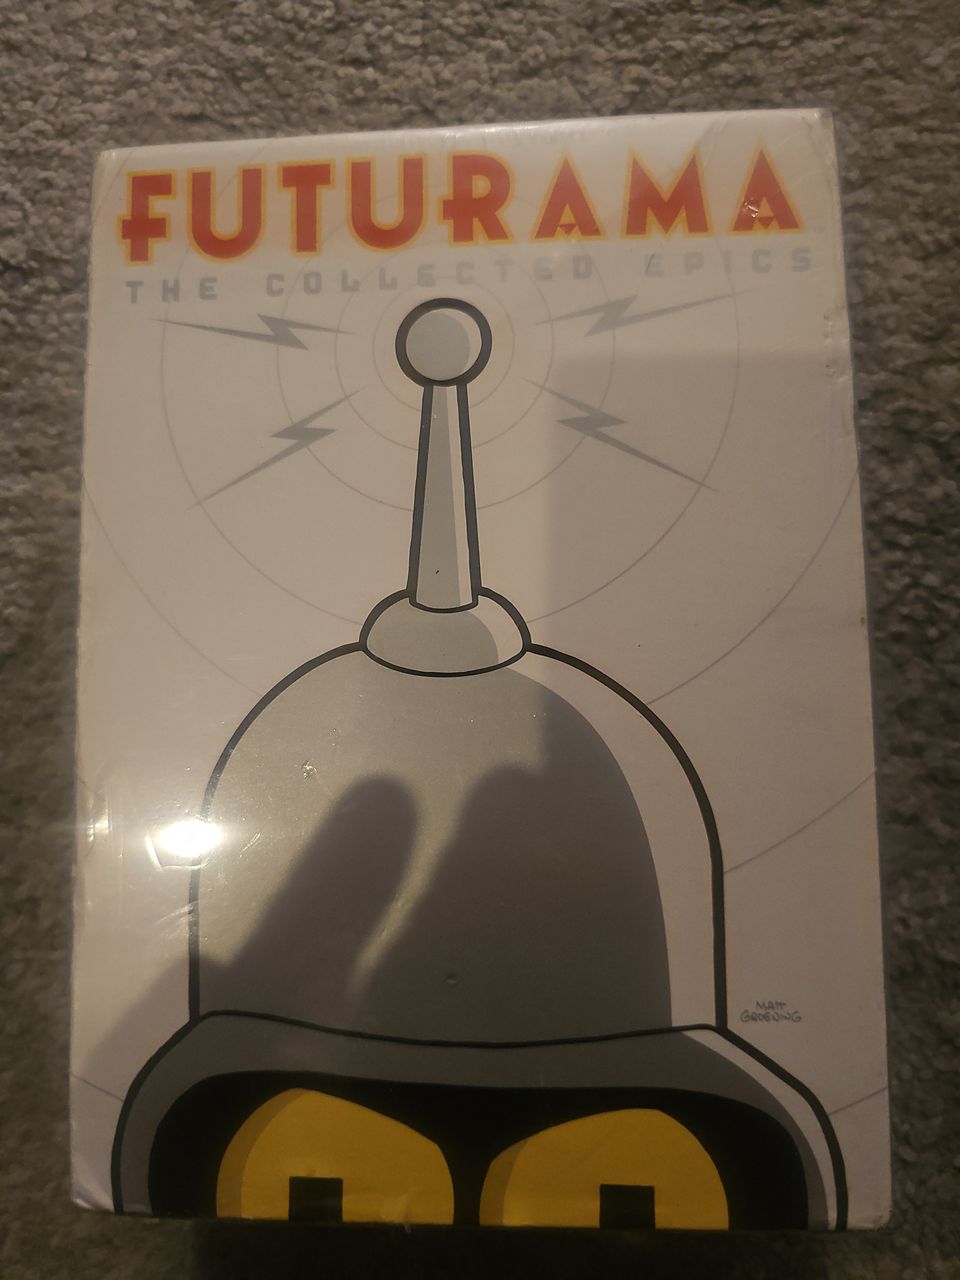 Futurama the collected epics